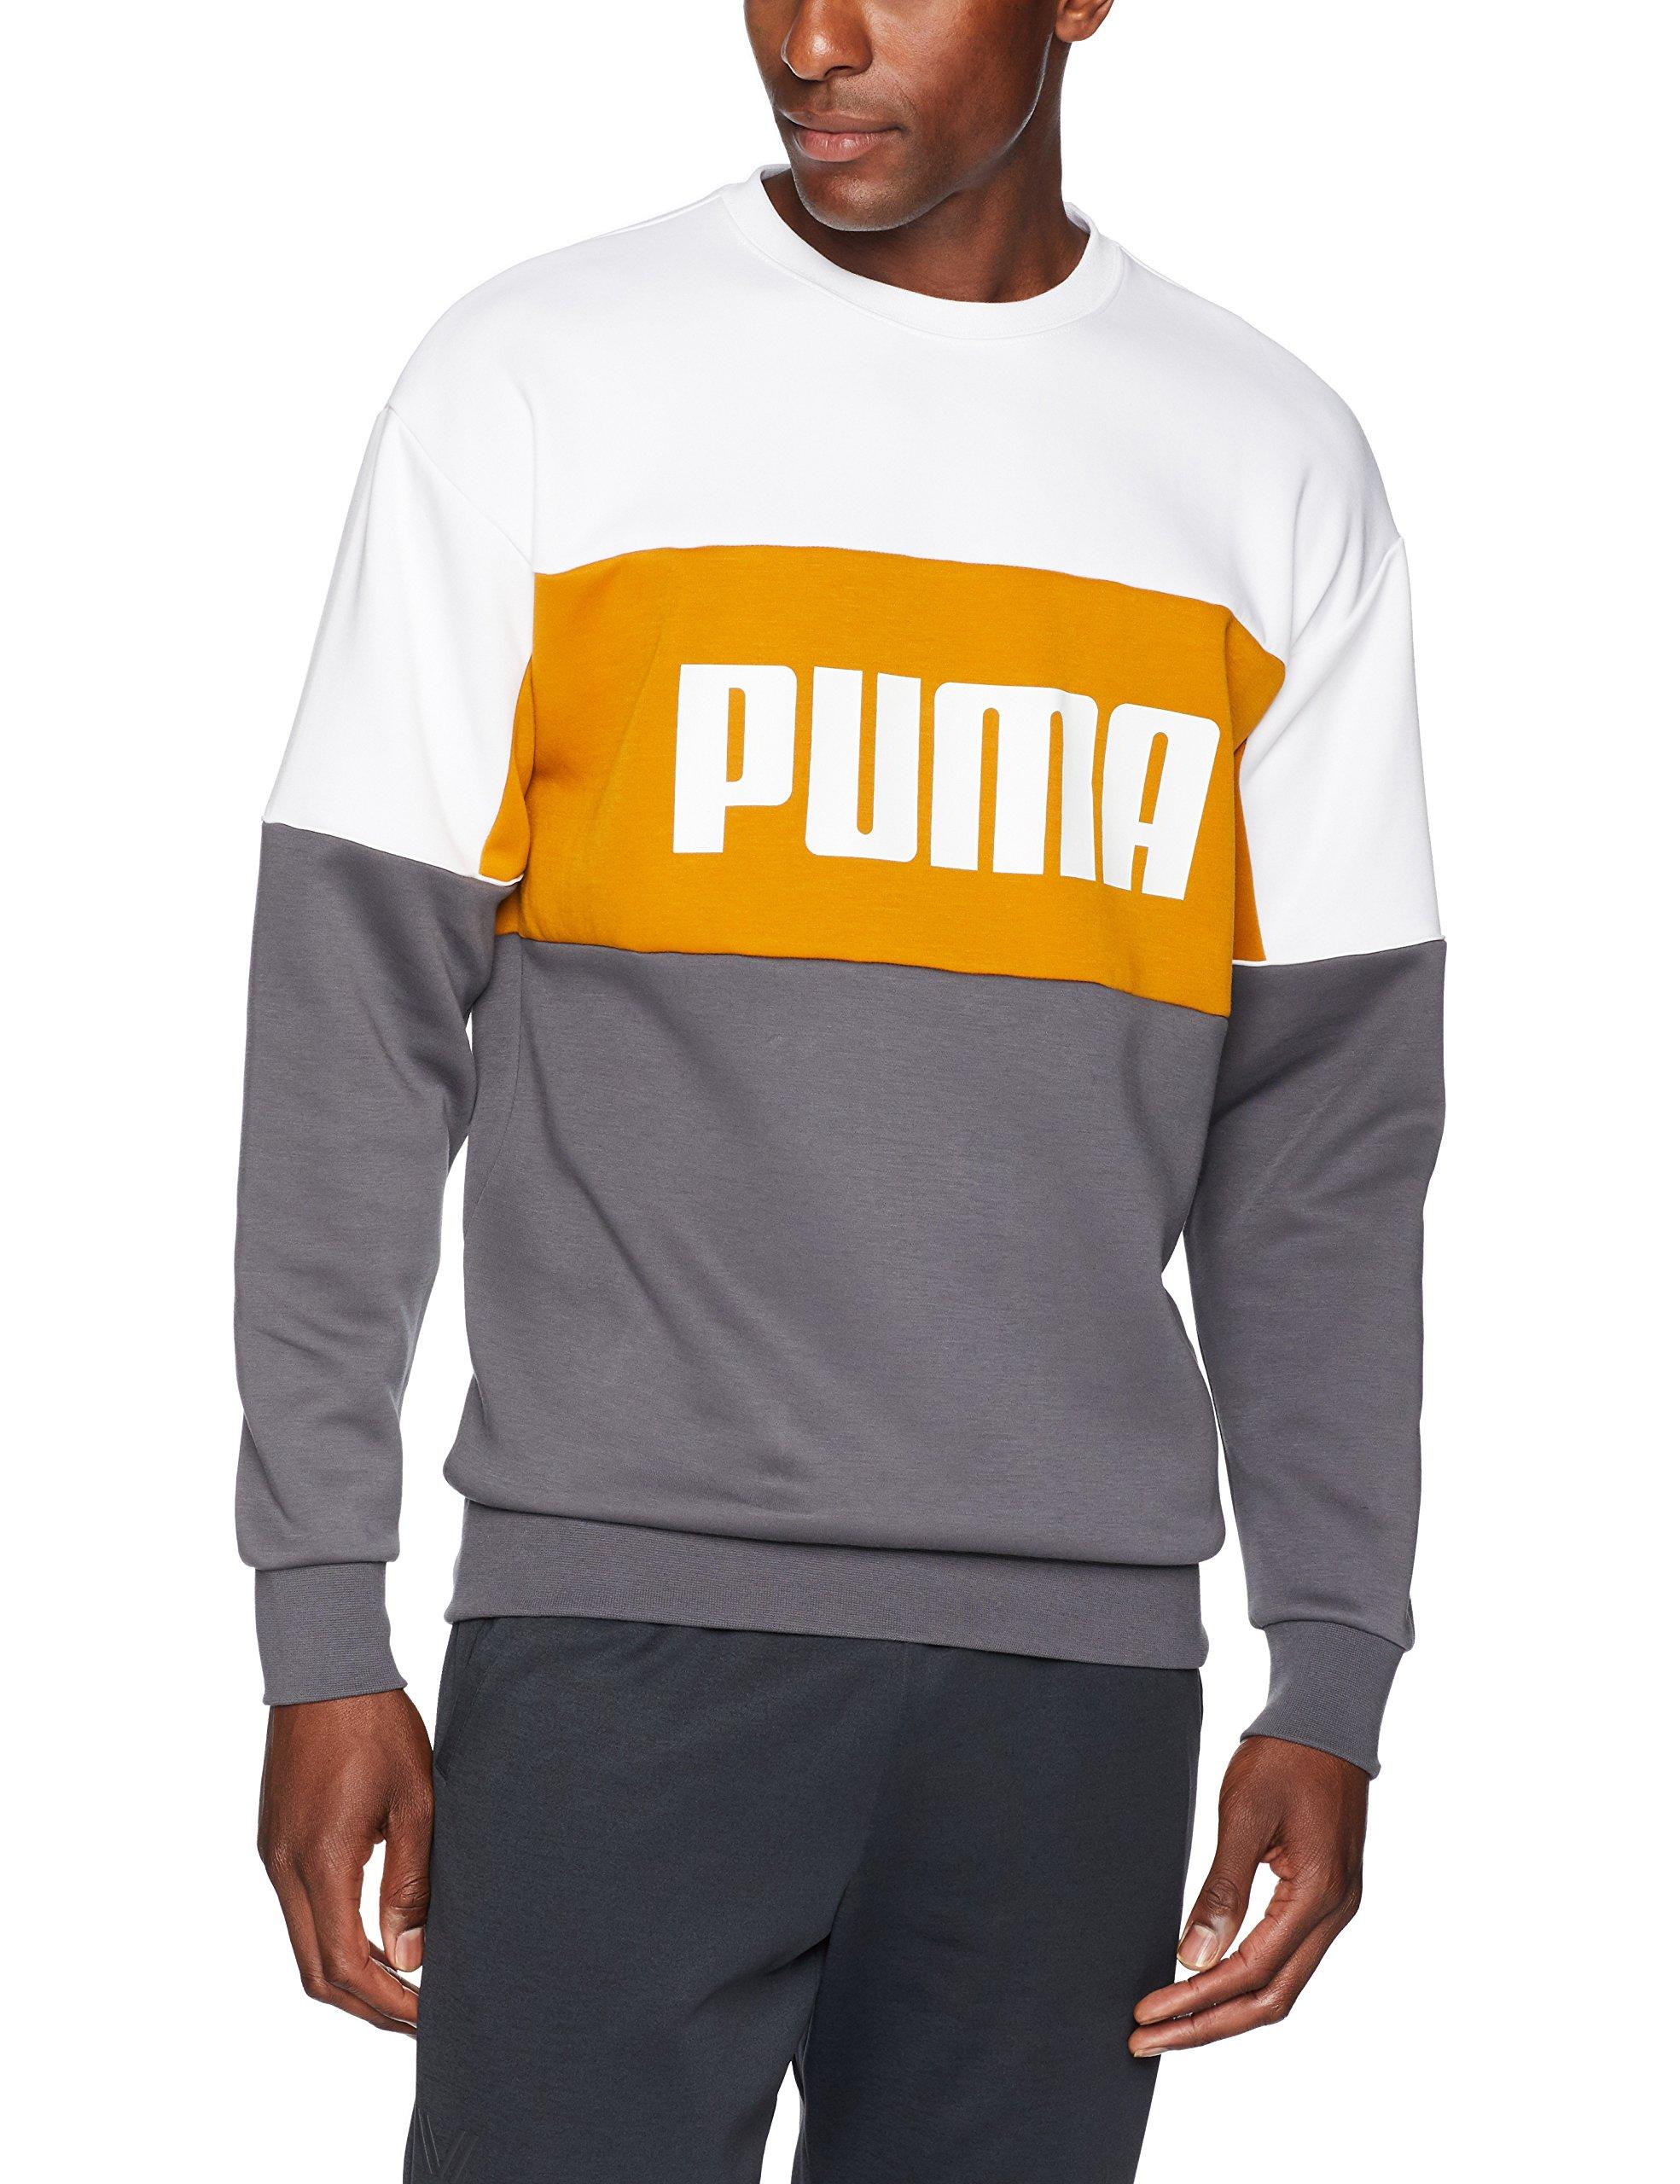 PUMA Cotton Retro Crew Sweatshirt in 14 (Gray) for Men - Lyst